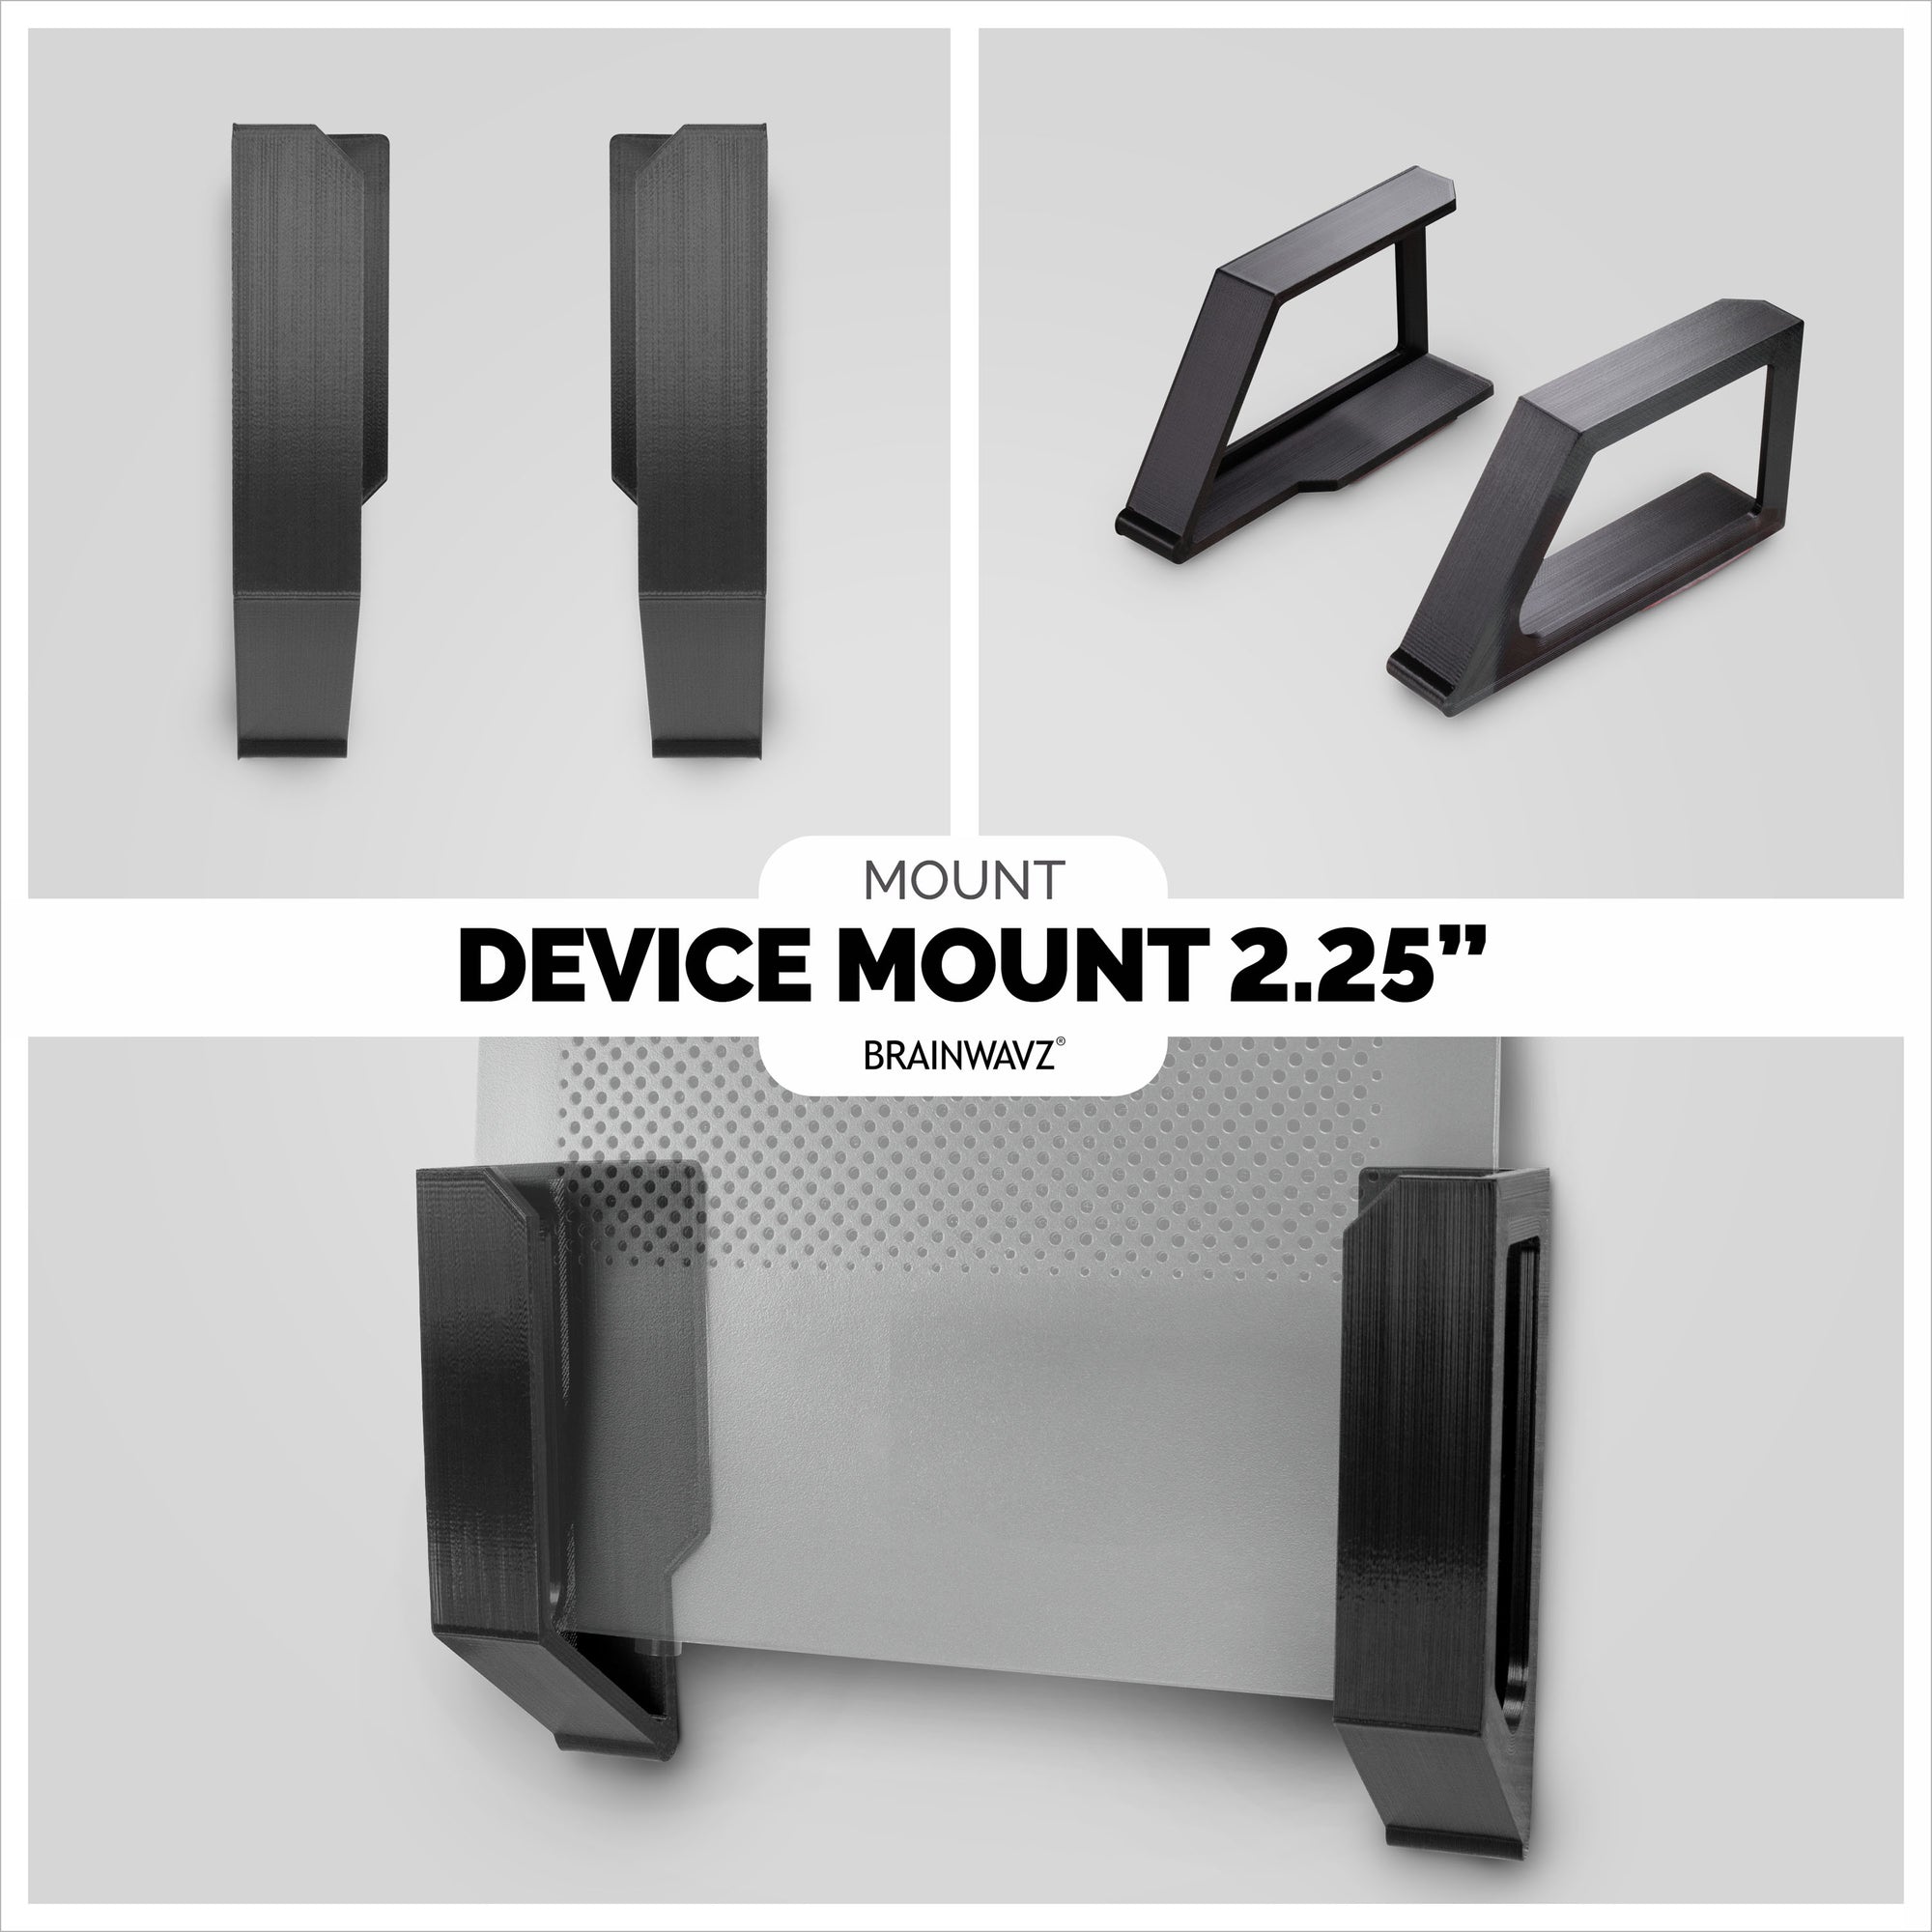 TP-link Deco M4 & S4 Adhesive Wall Mount Holder - No Screws, Easy to I -  Brainwavz Audio